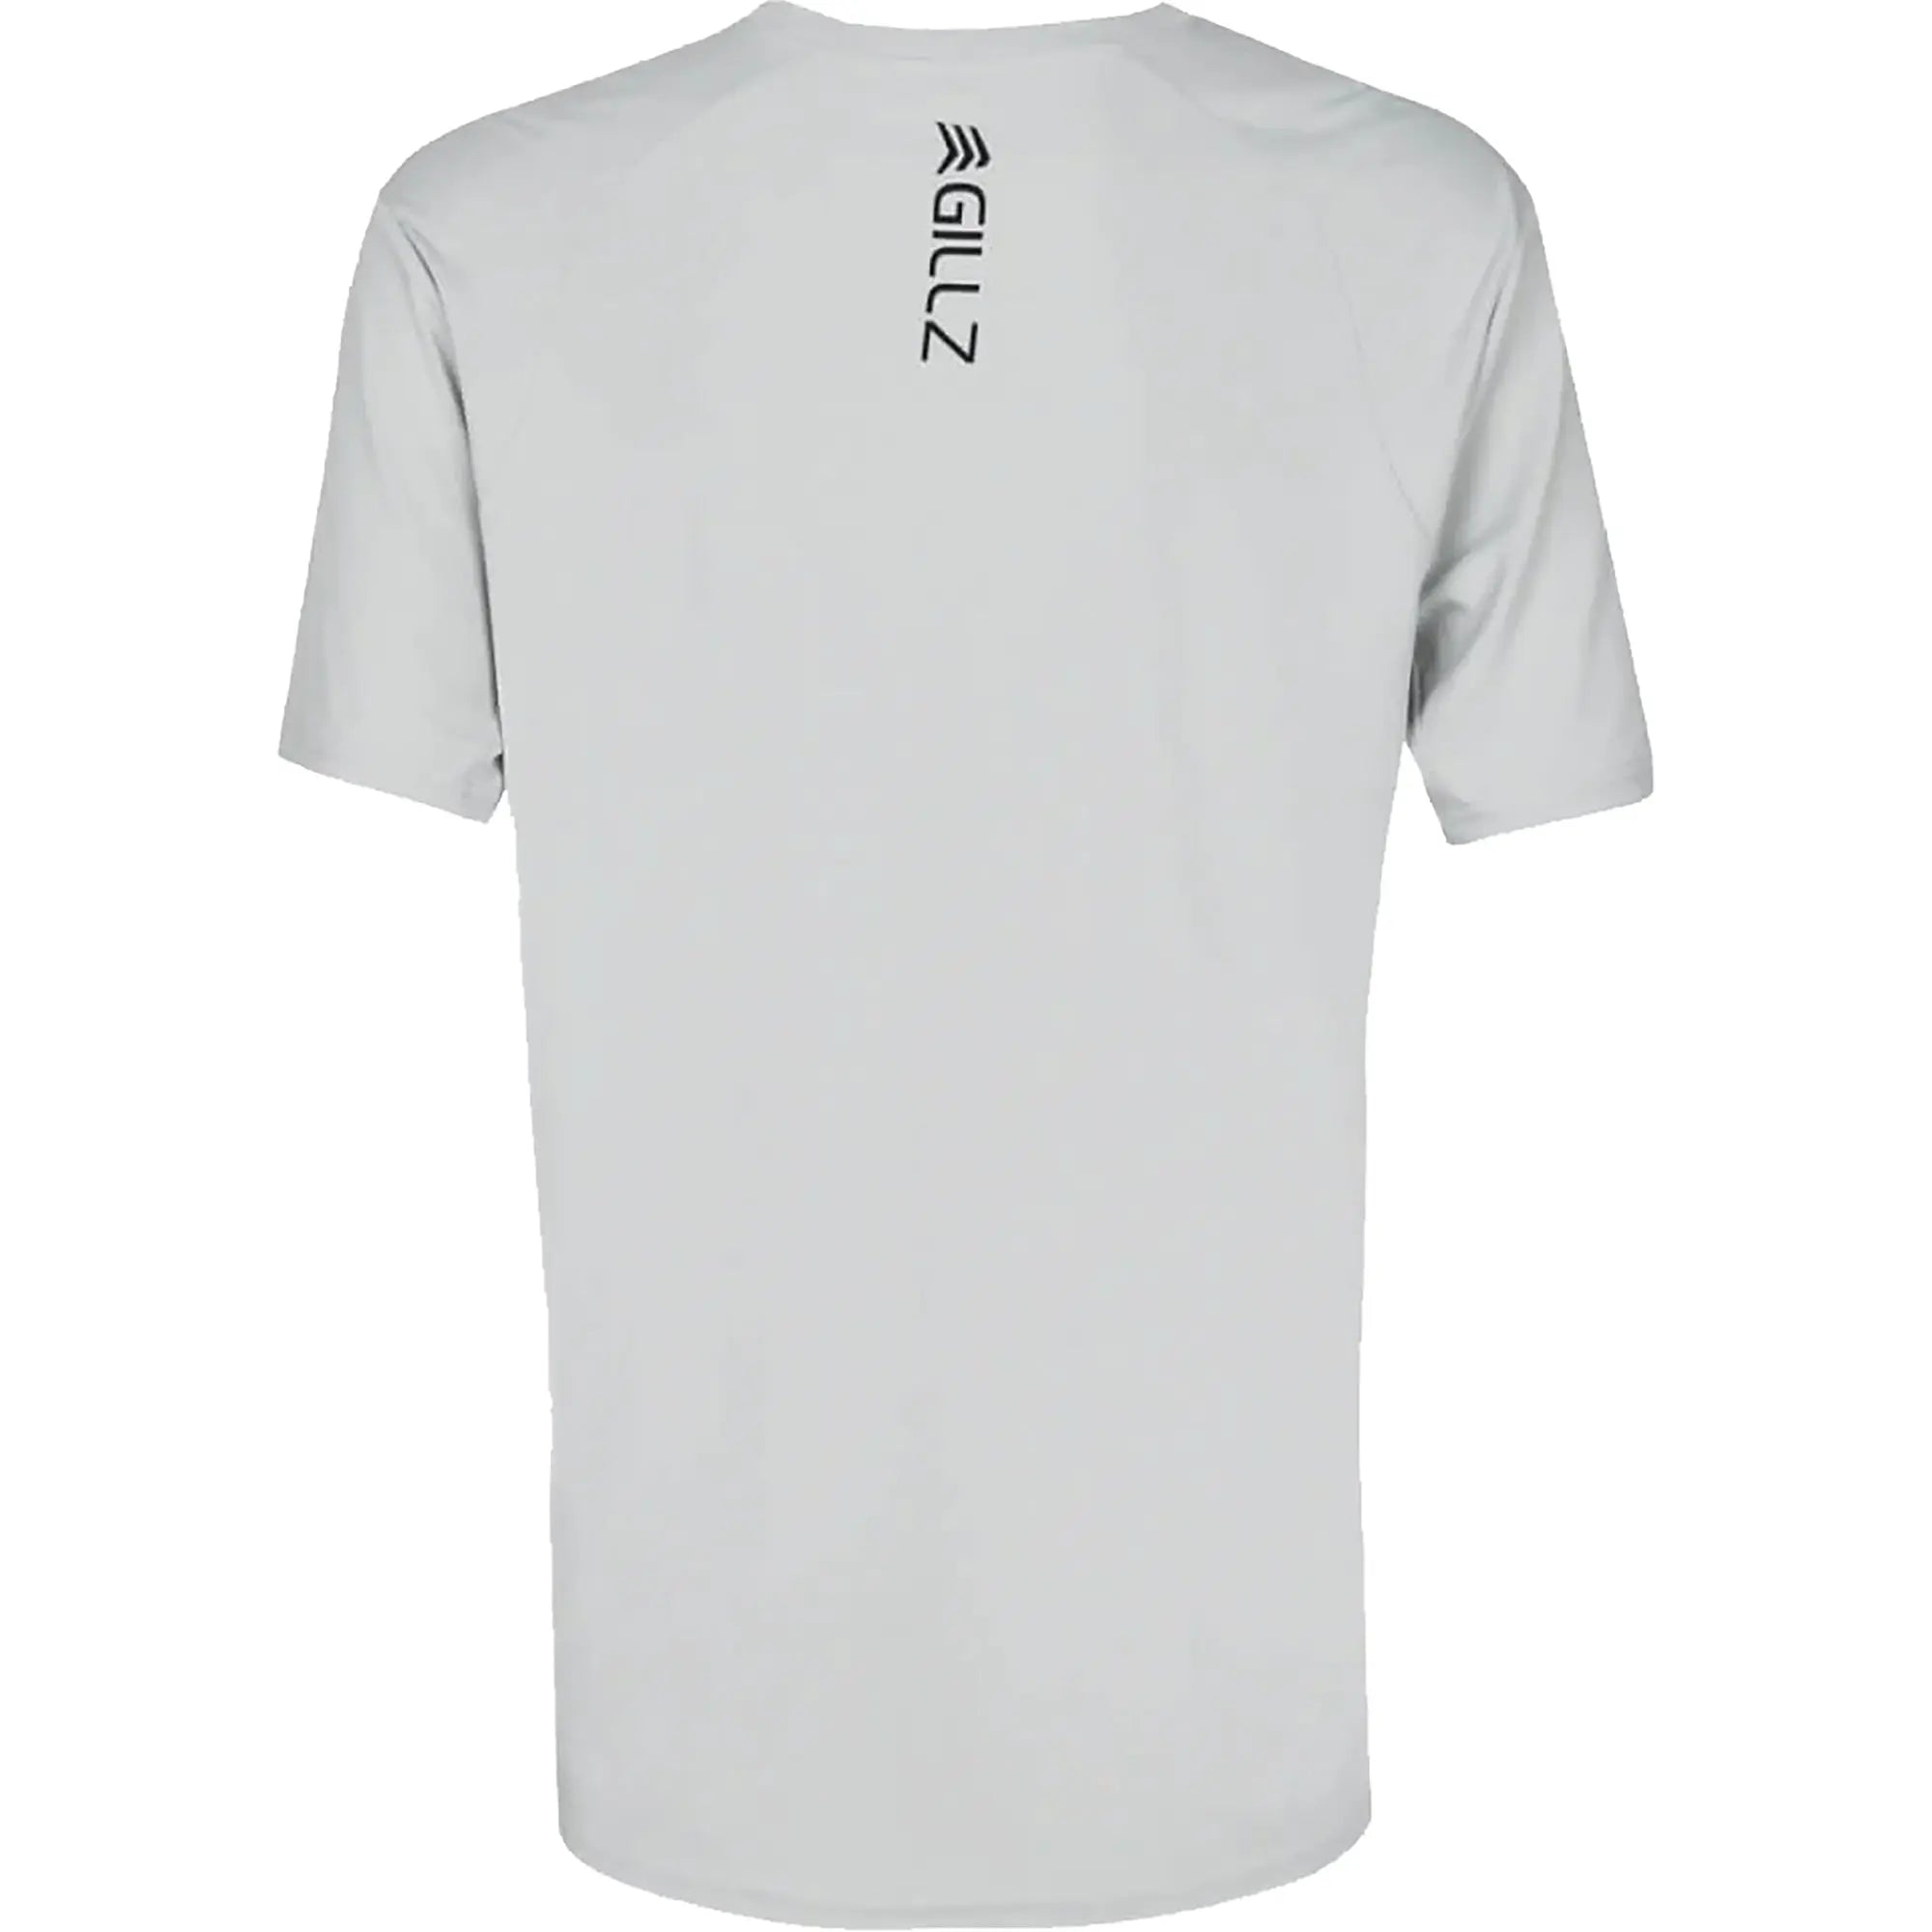 Gillz Pro Series UV T-Shirt Gillz